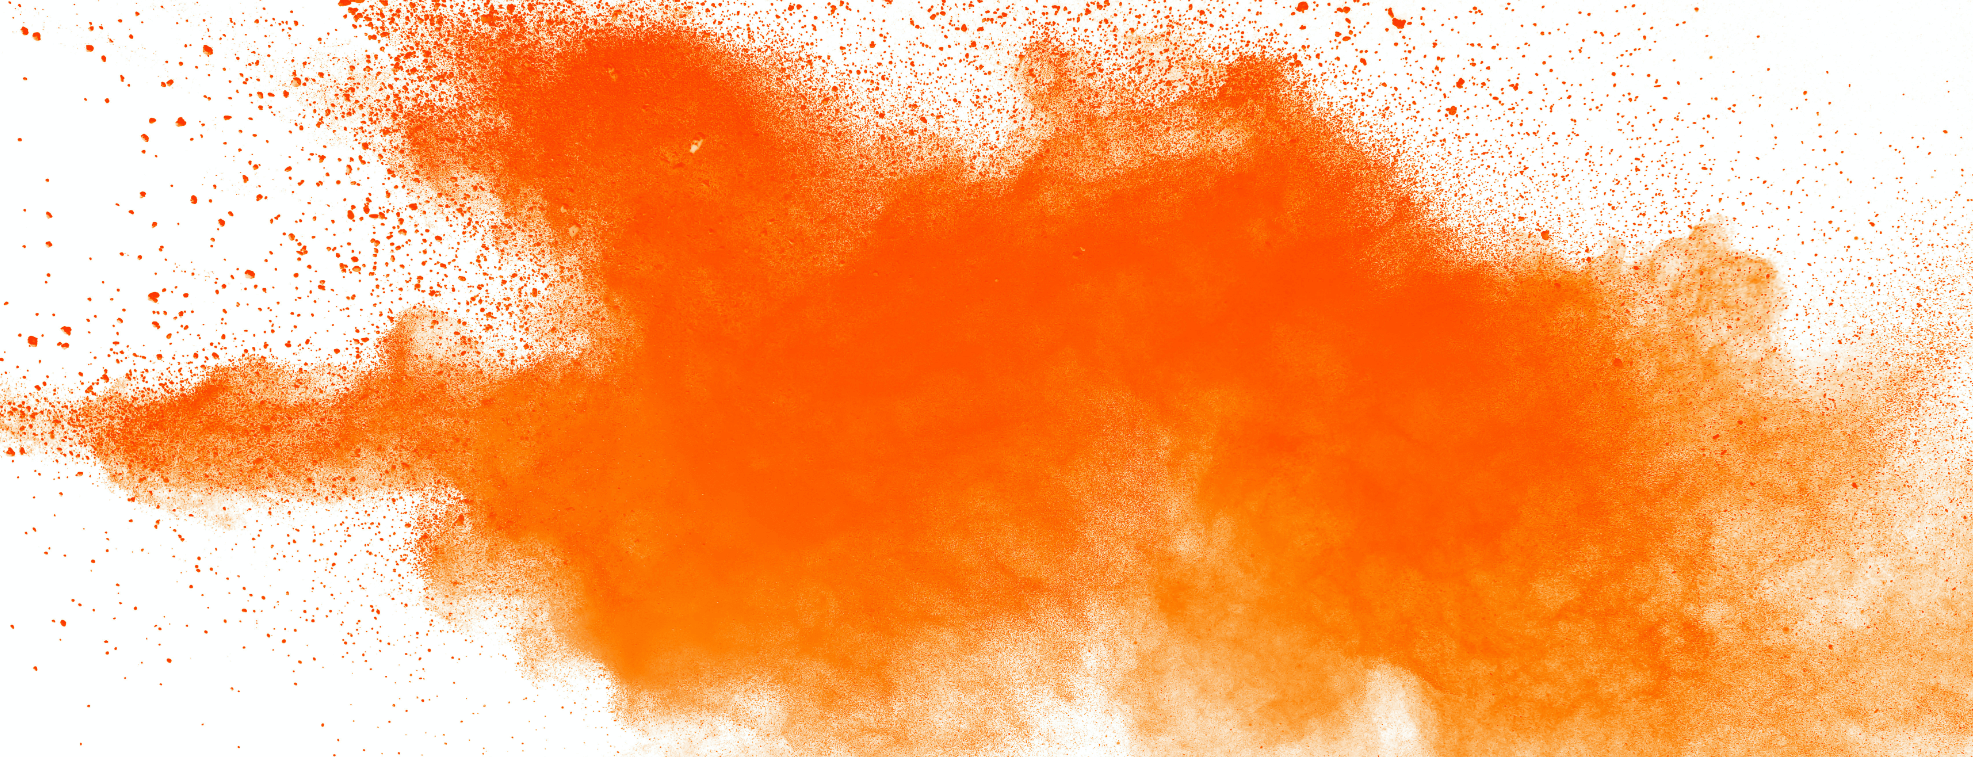 Orange paint on a white board